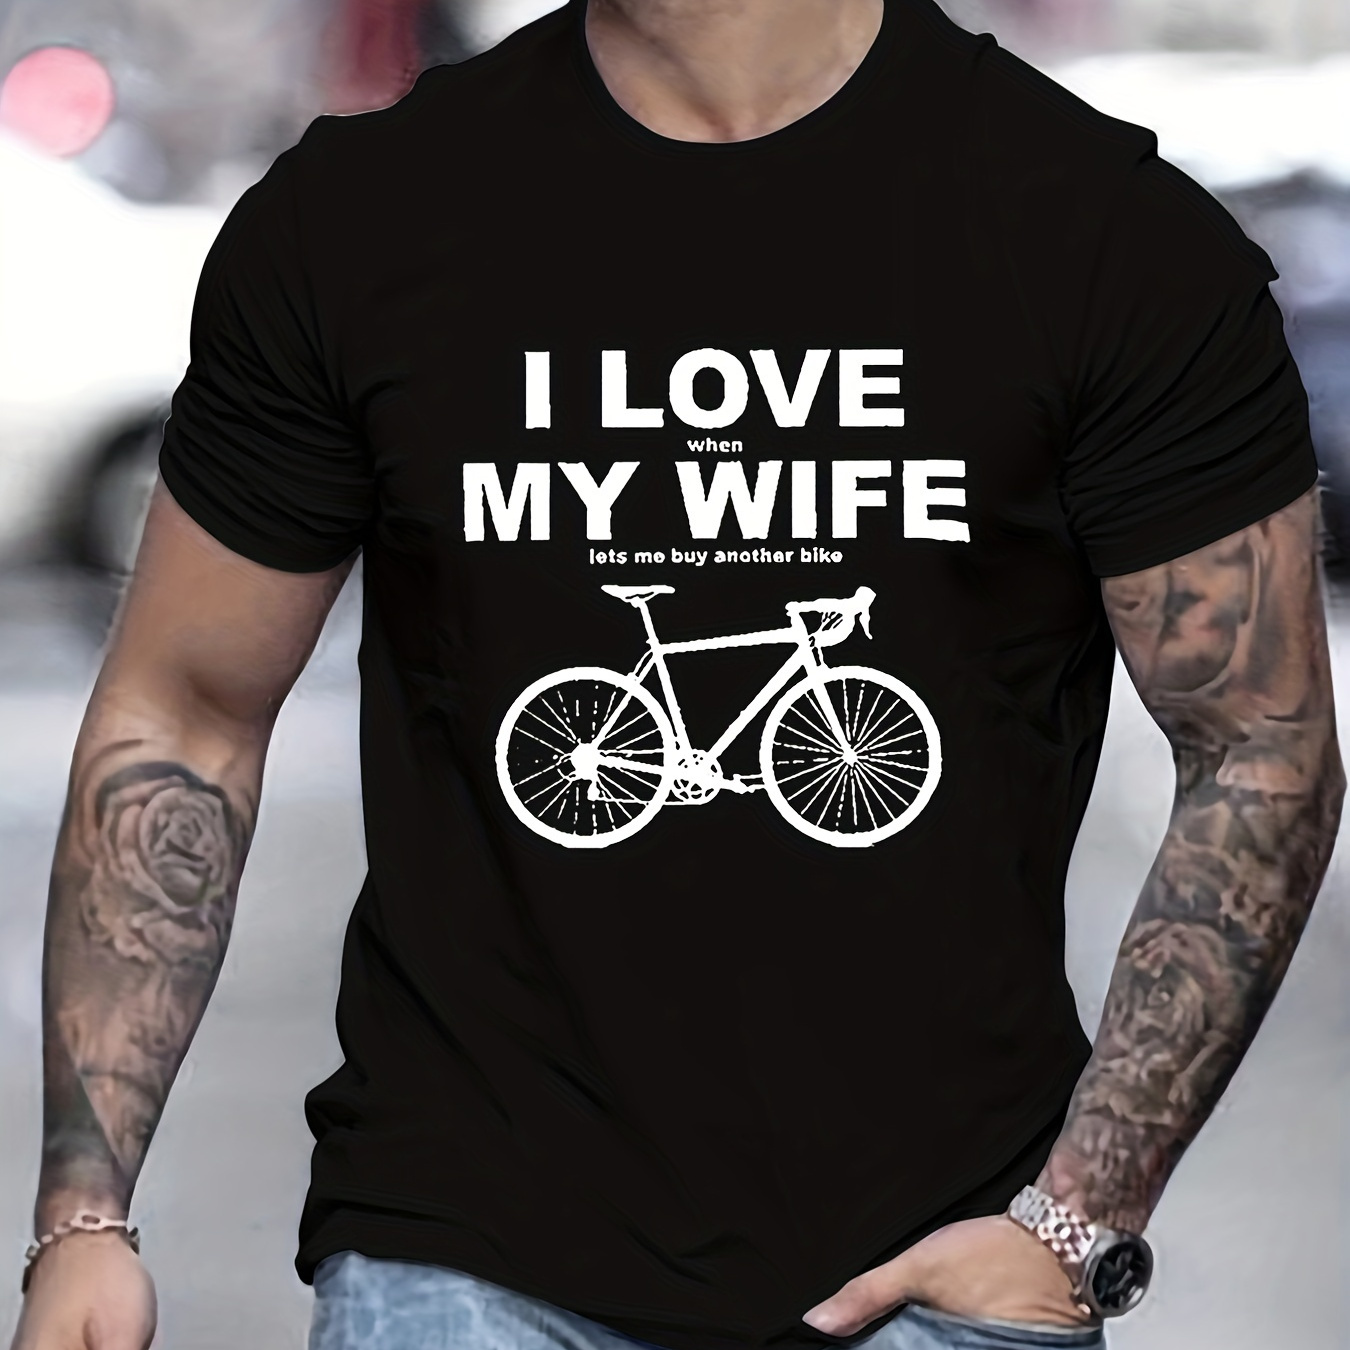 

Funny Bike Lover Pattern Print Men's Comfy T-shirt, Graphic Tee Men's Summer Outdoor Clothes, Men's Clothing, Tops For Men, Gift For Men